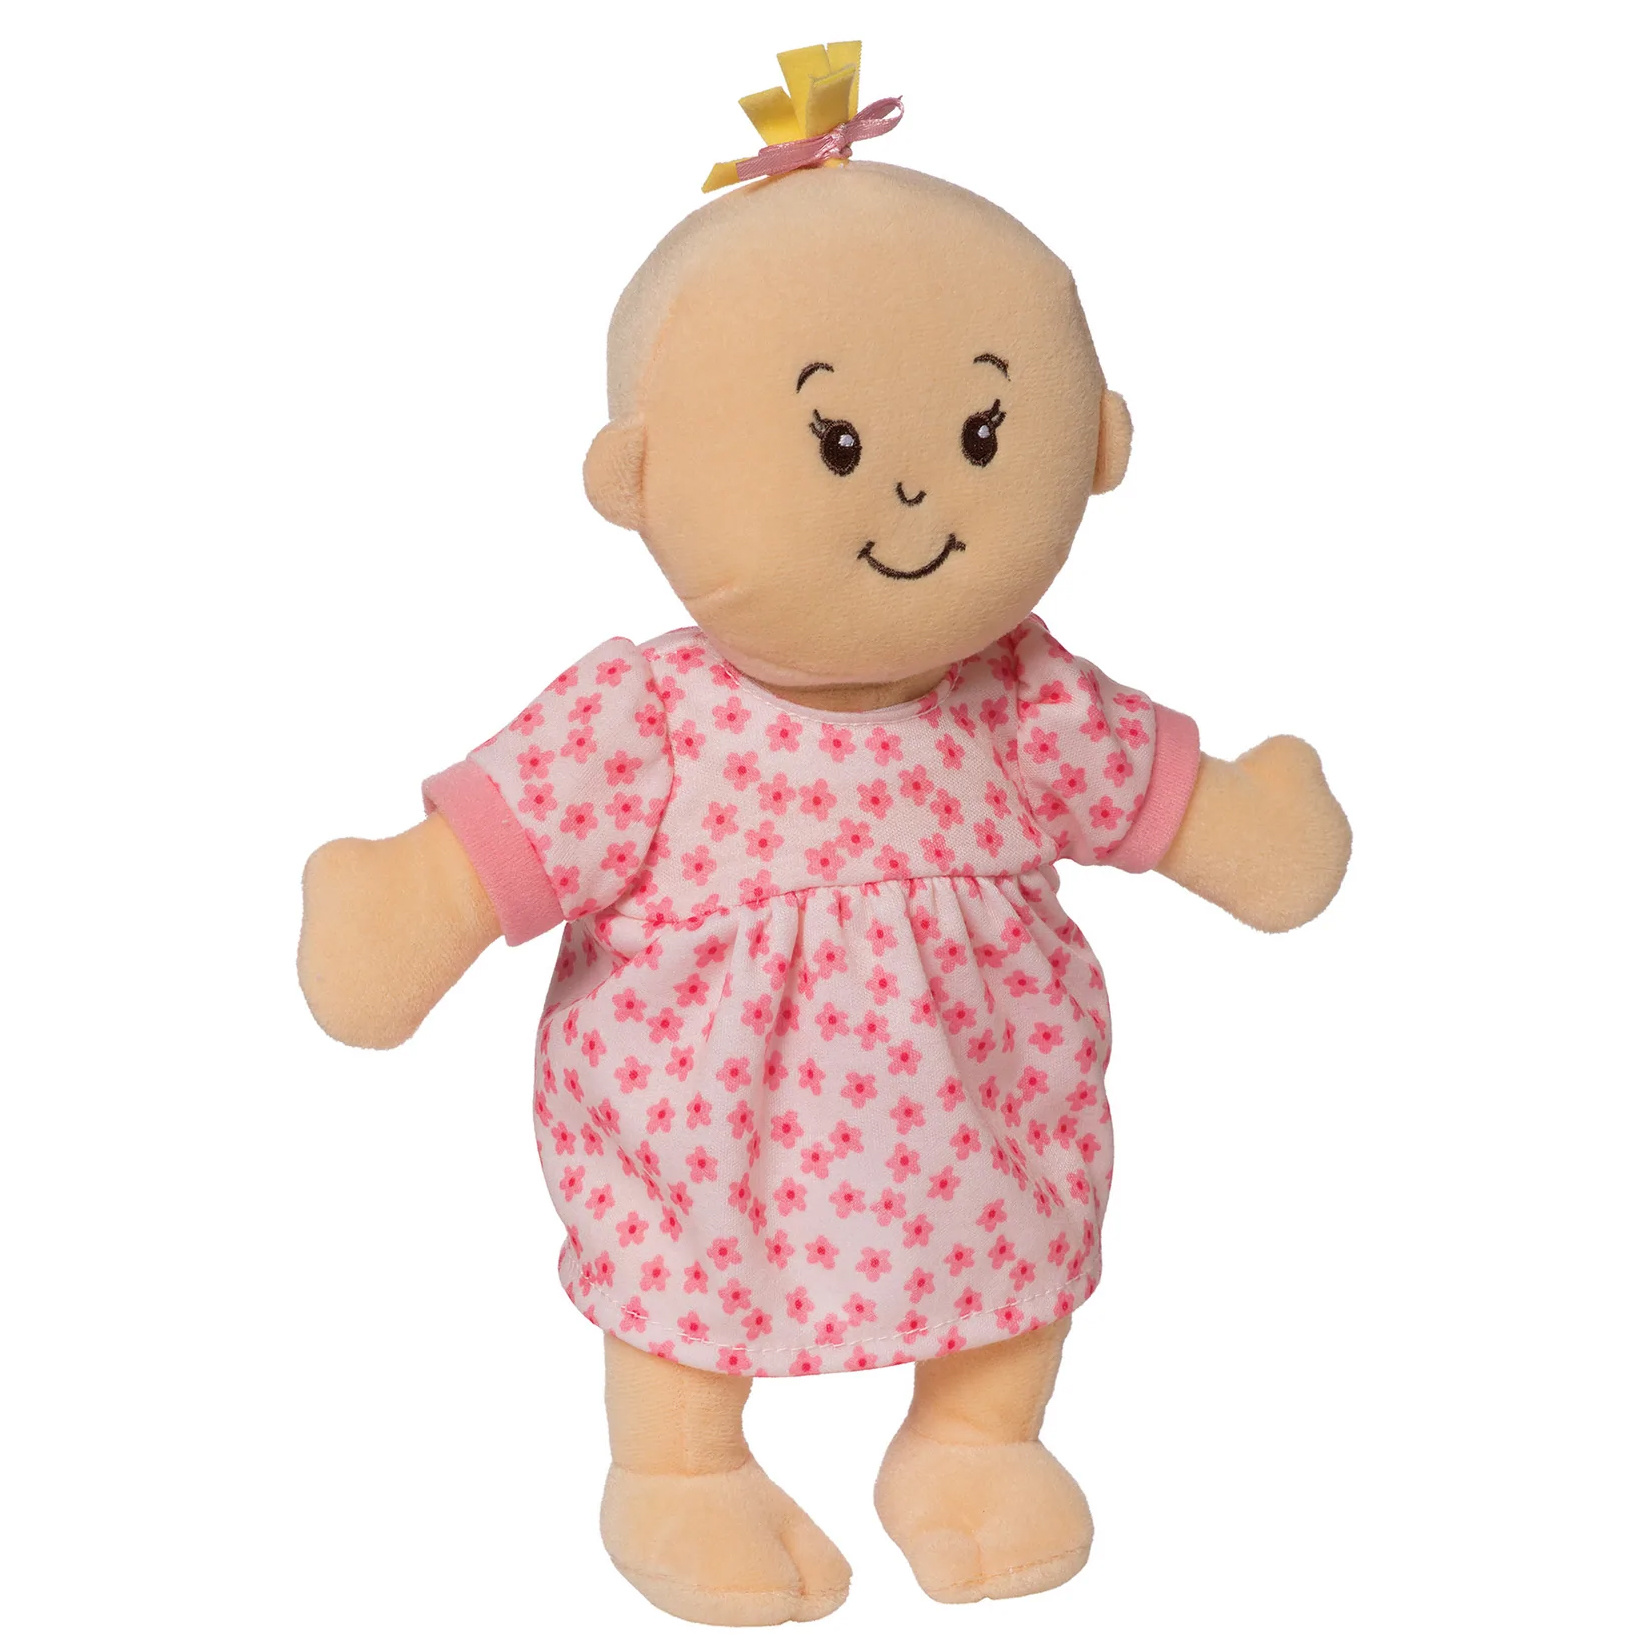 Manhattan Toys Wee Baby Stella Peach Doll | Blonde Hair (in store only)